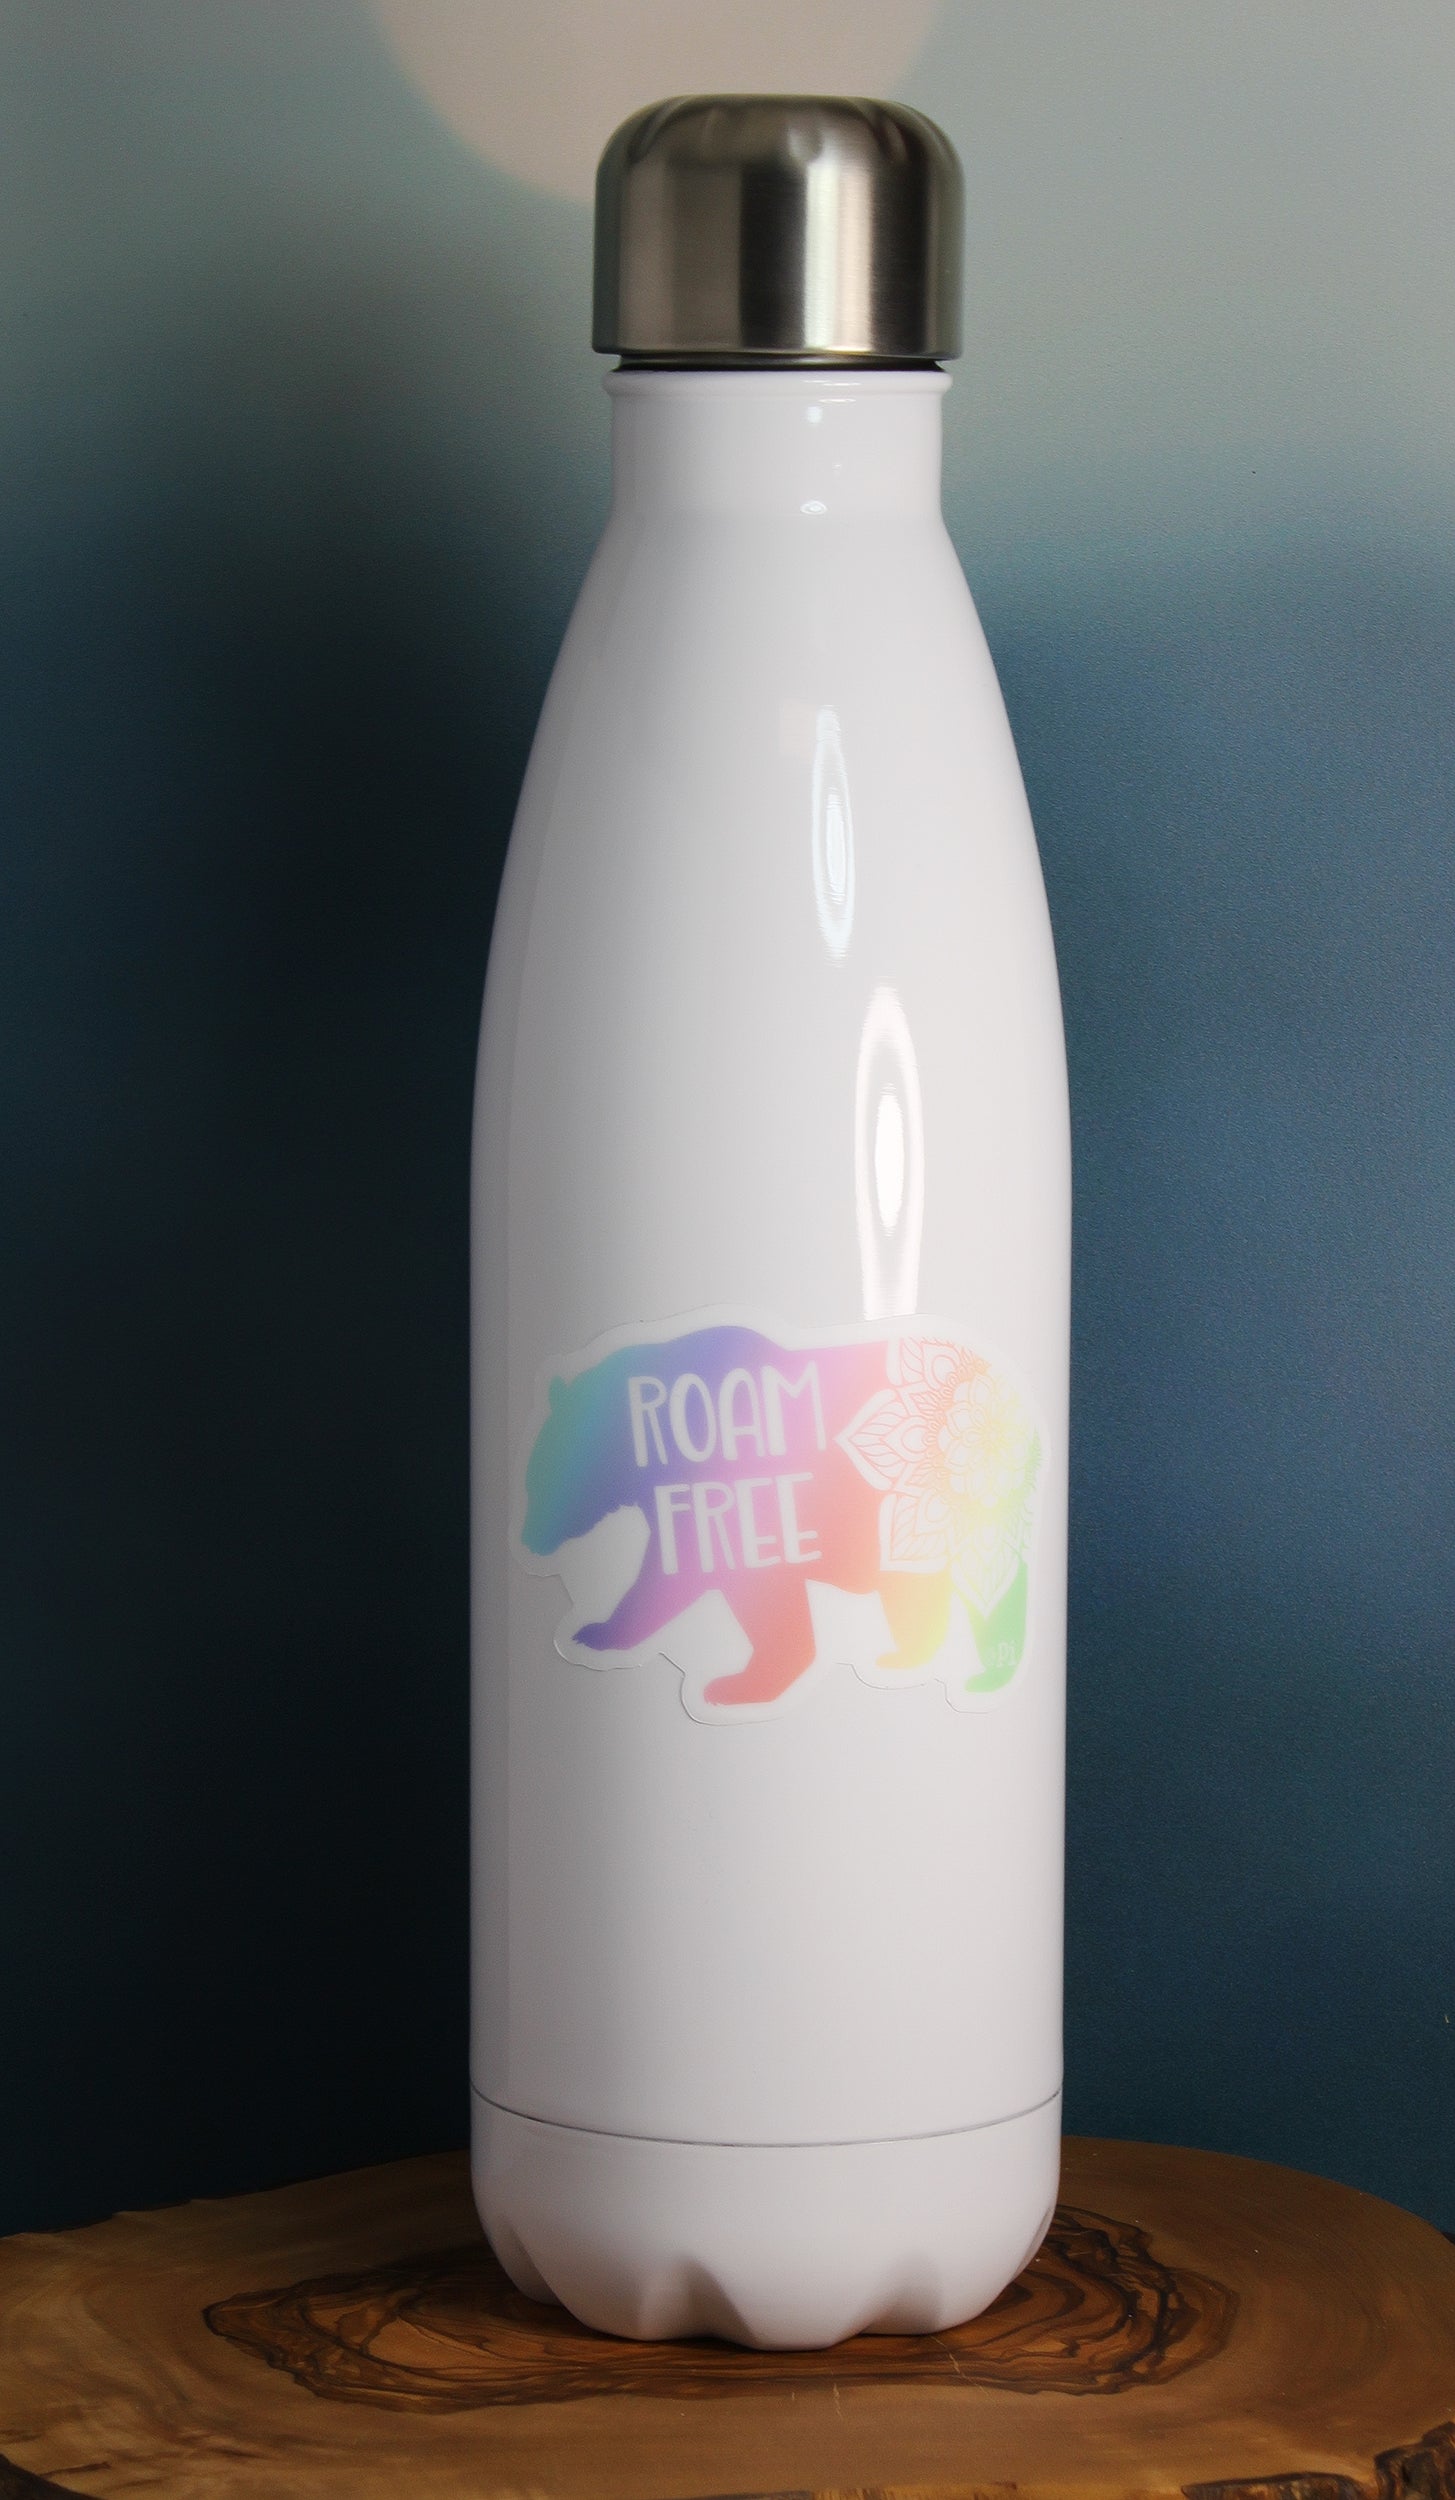 Roam Free Bear Sticker 